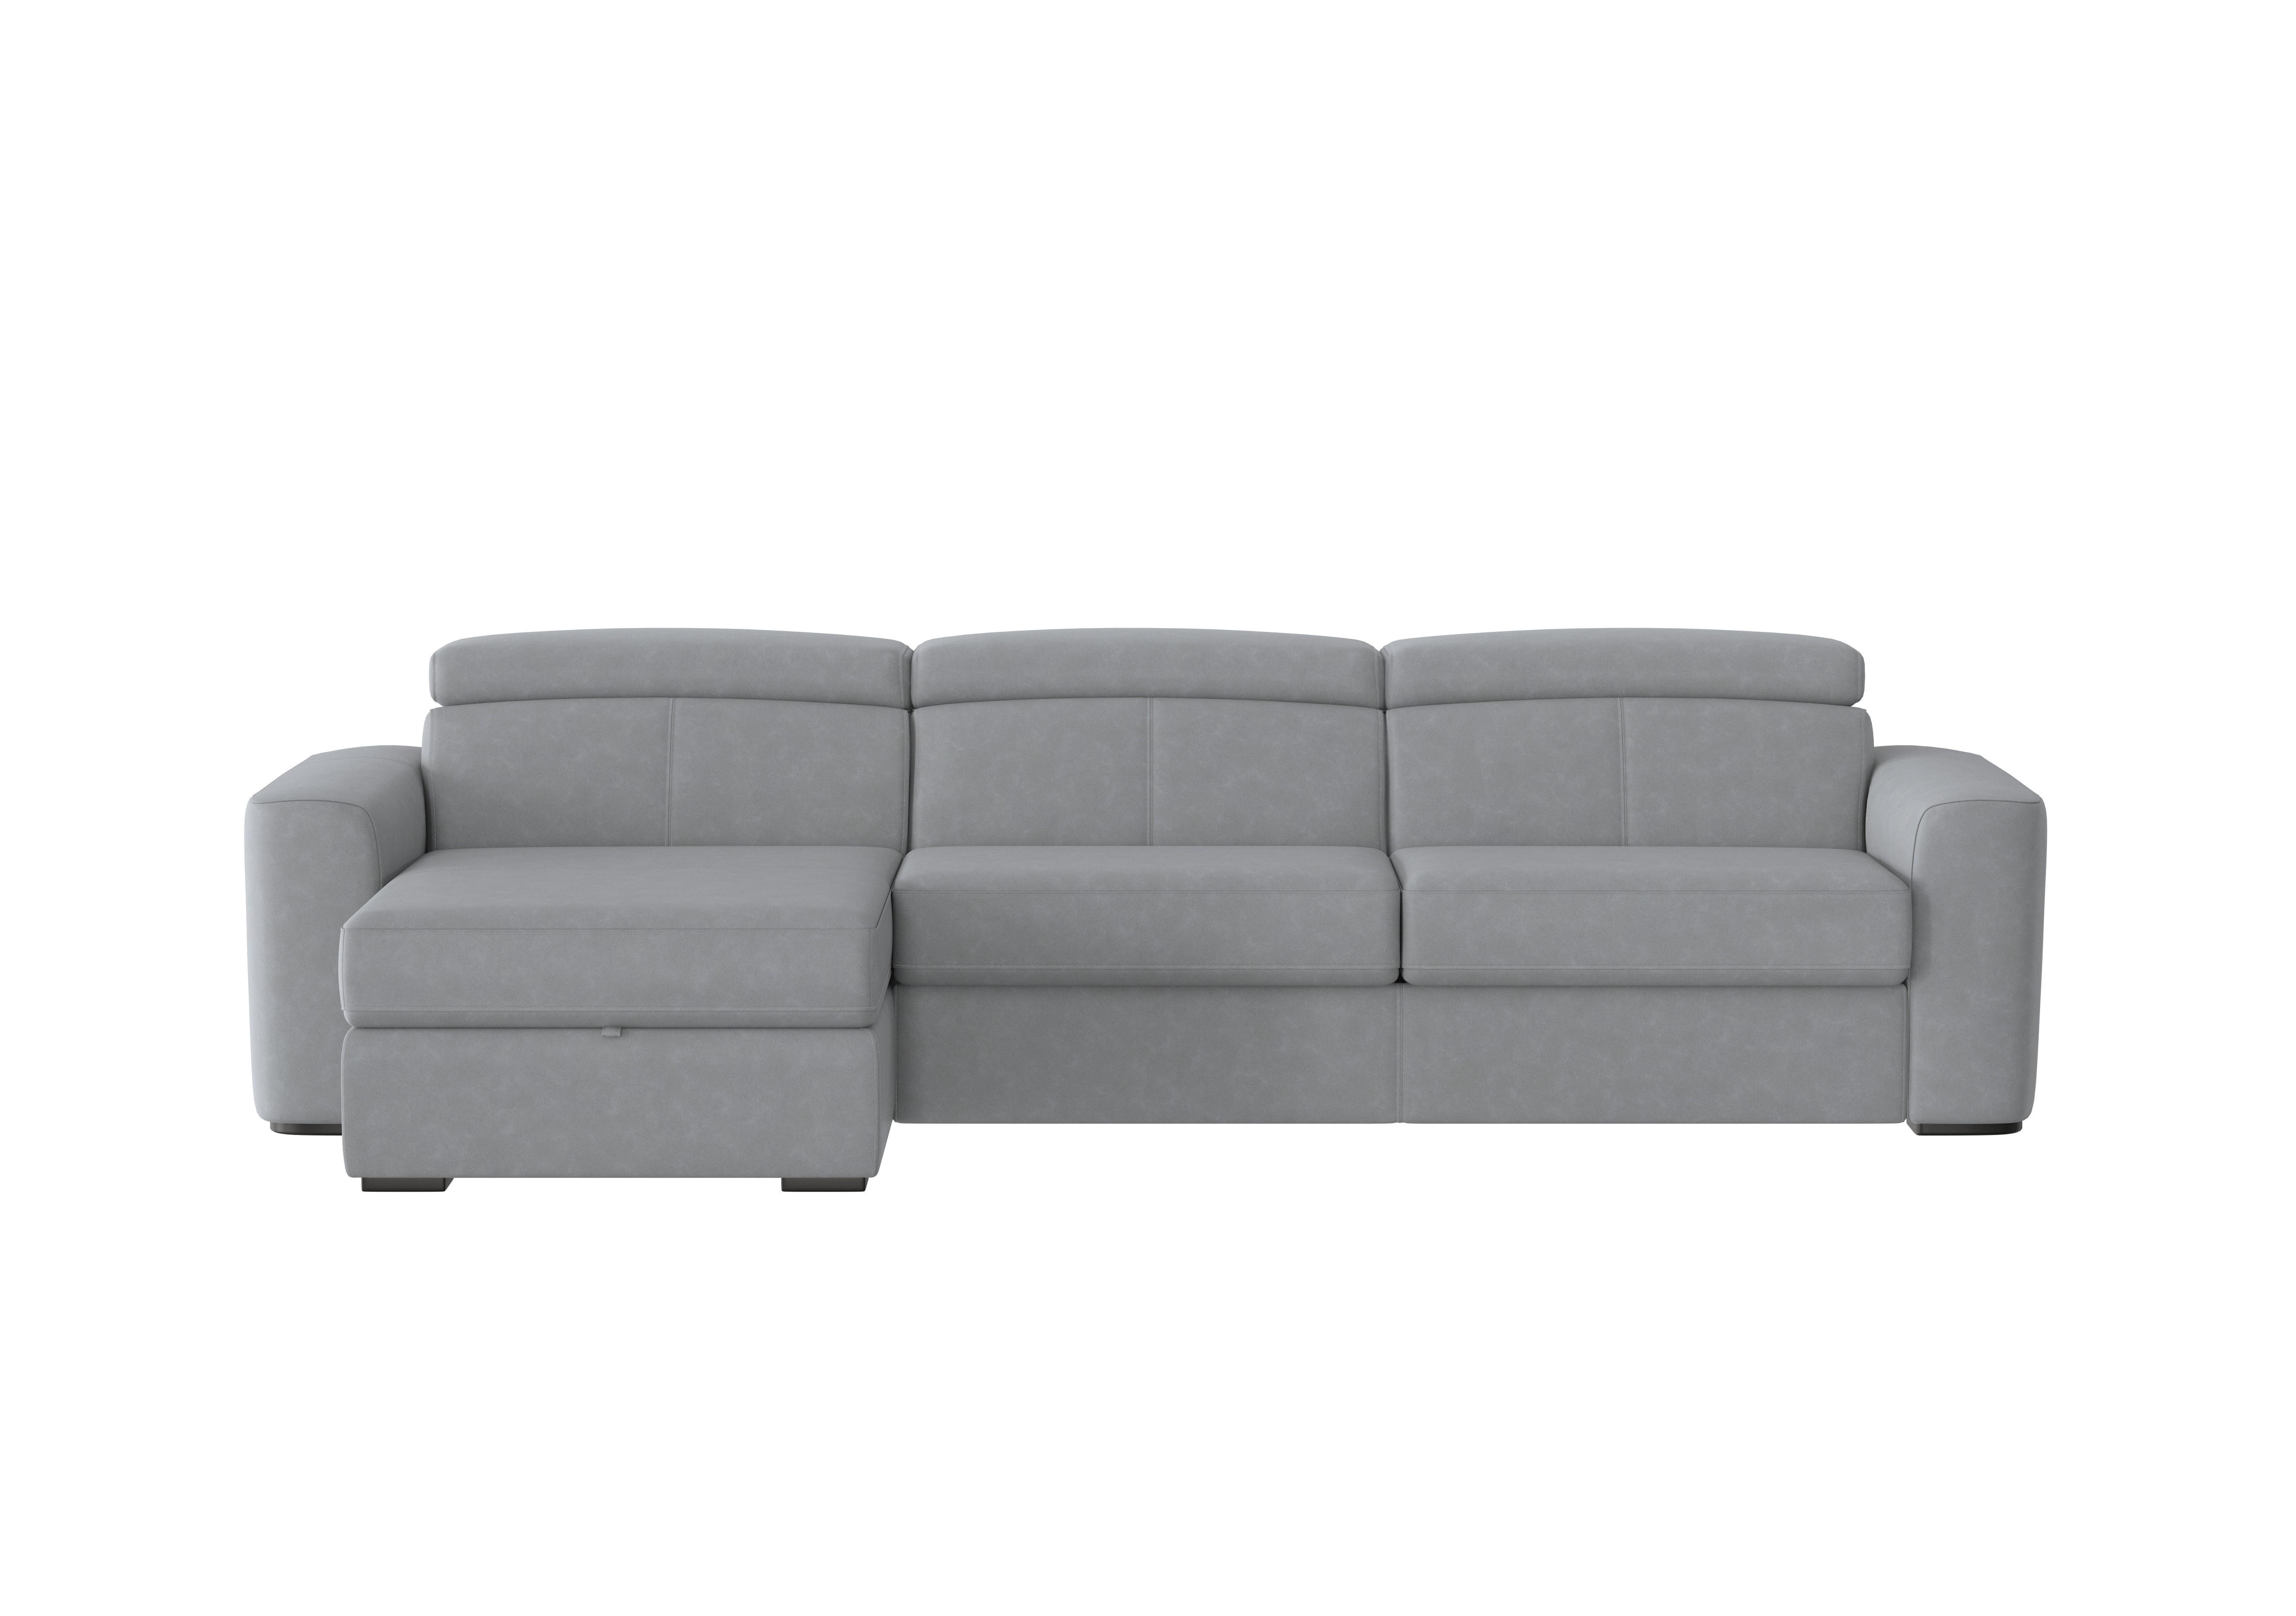 Infinity Fabric Corner Chaise Sofa Bed with Storage in Bfa-Ori-R07 Bluish Grey on Furniture Village